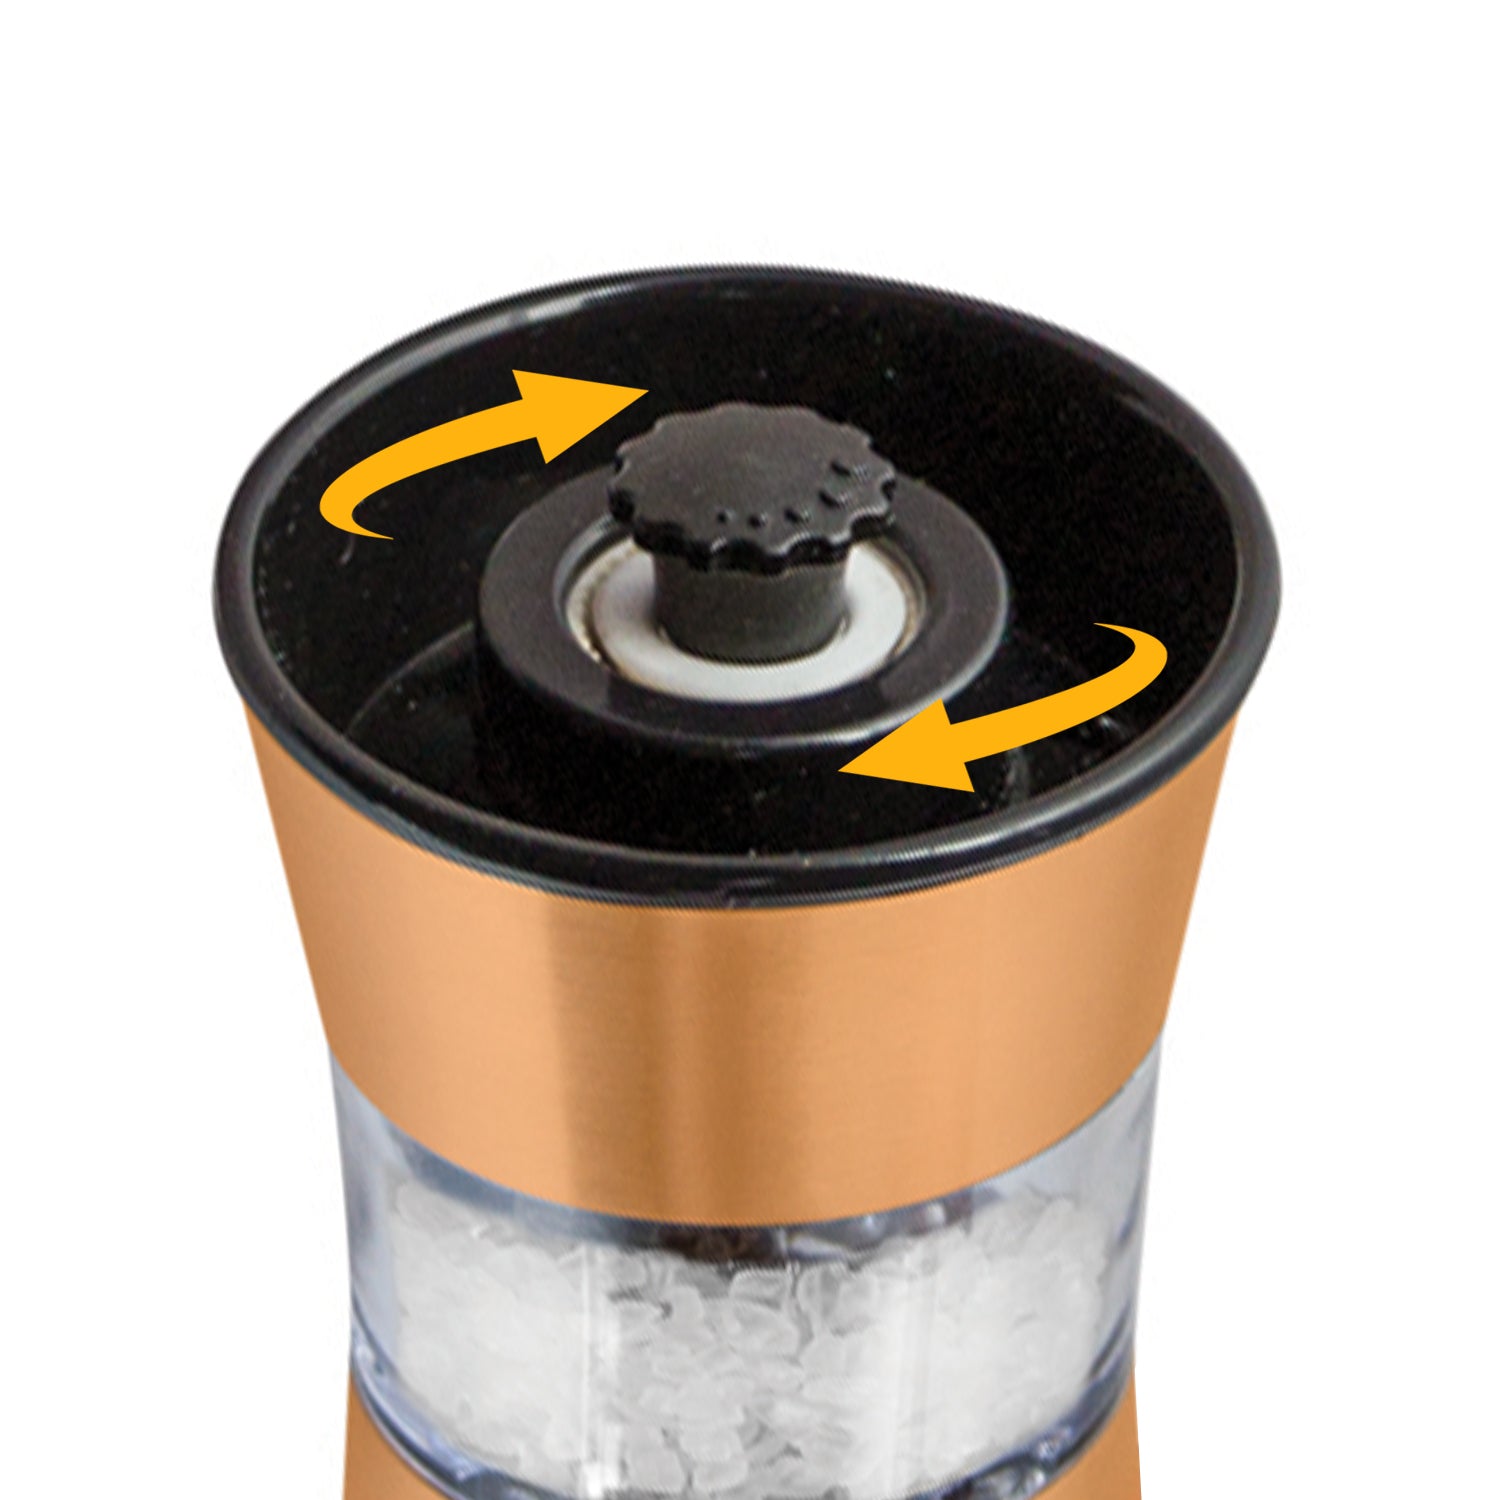 Rechargeable Gravity Copper Salt and Pepper Grinder Set